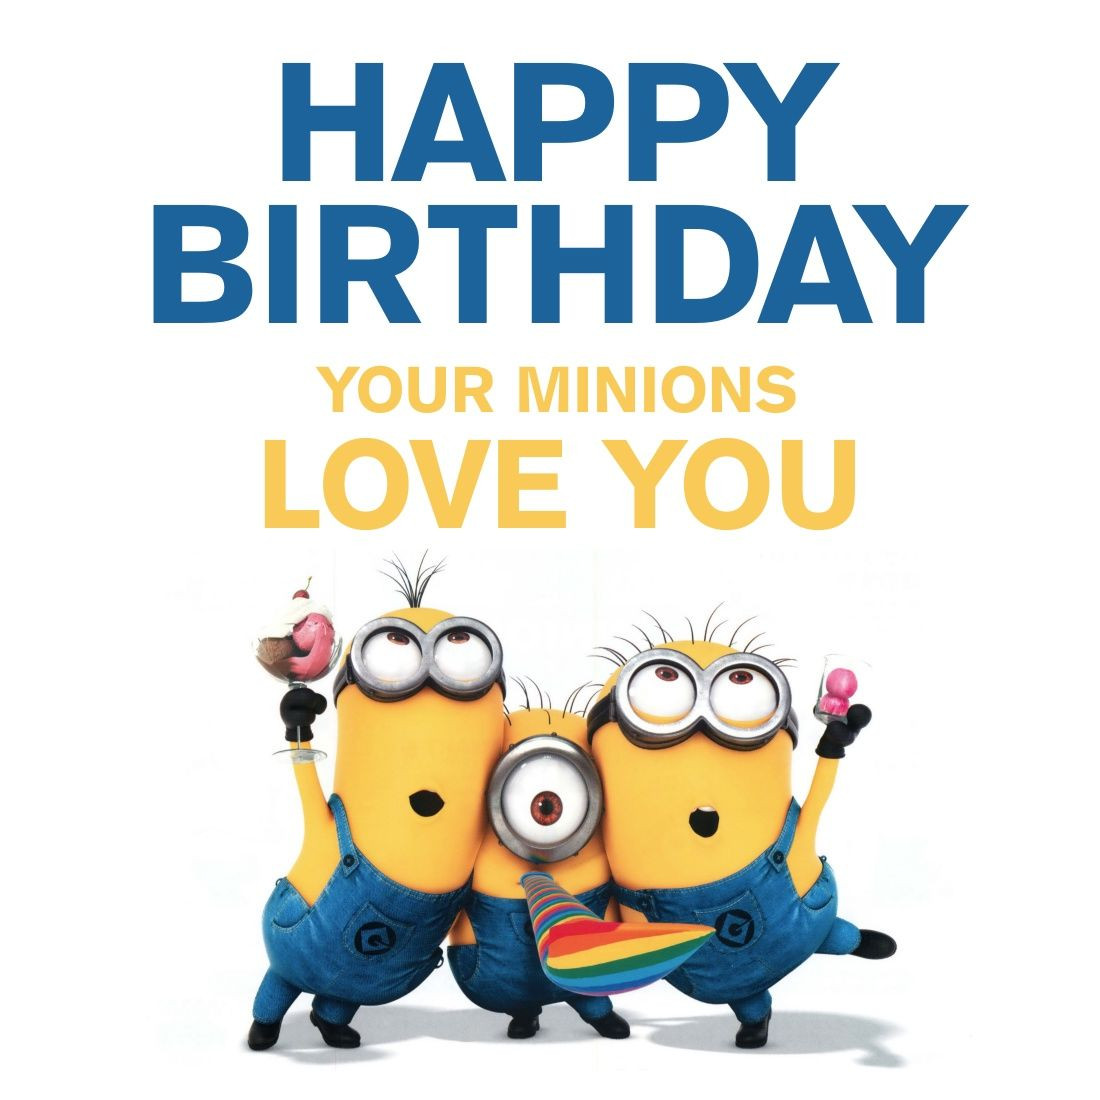 Minions Geburtstagsbilder
 Happy Birthday Your Minions Love You s